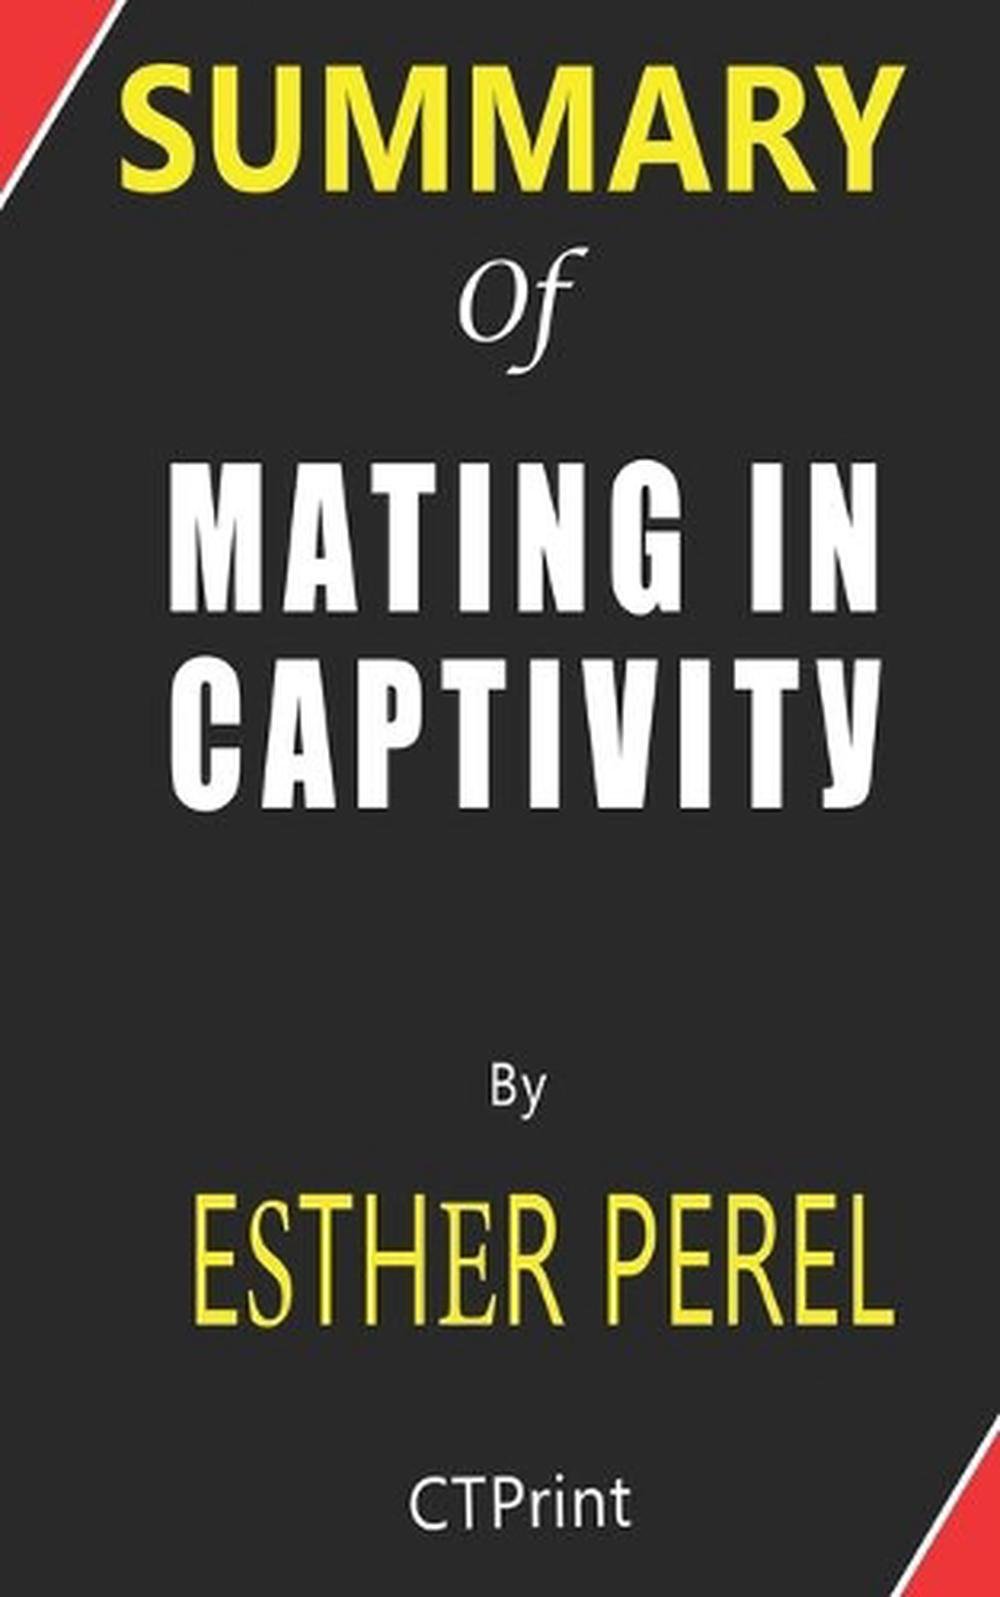 mating captivity book